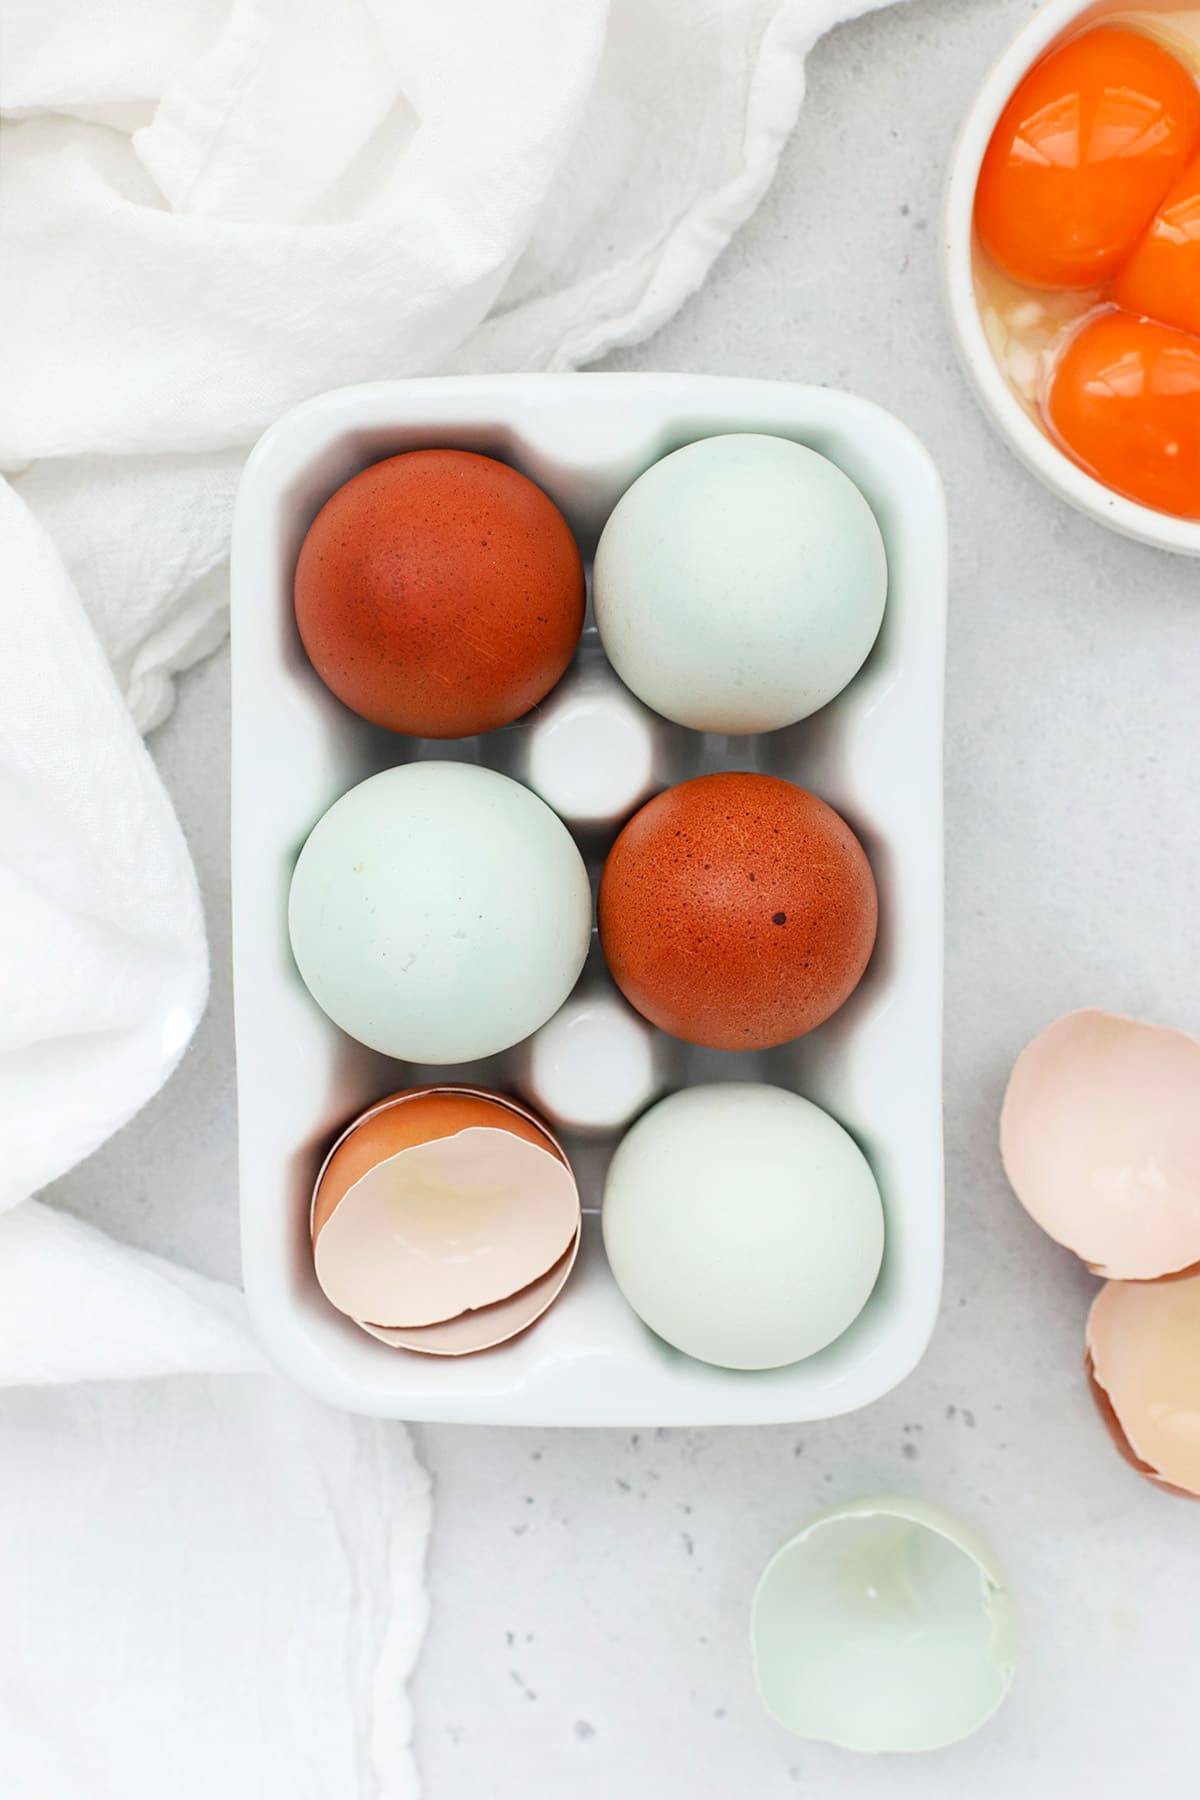 Overhead view of colorful farm eggs in a white egg carton